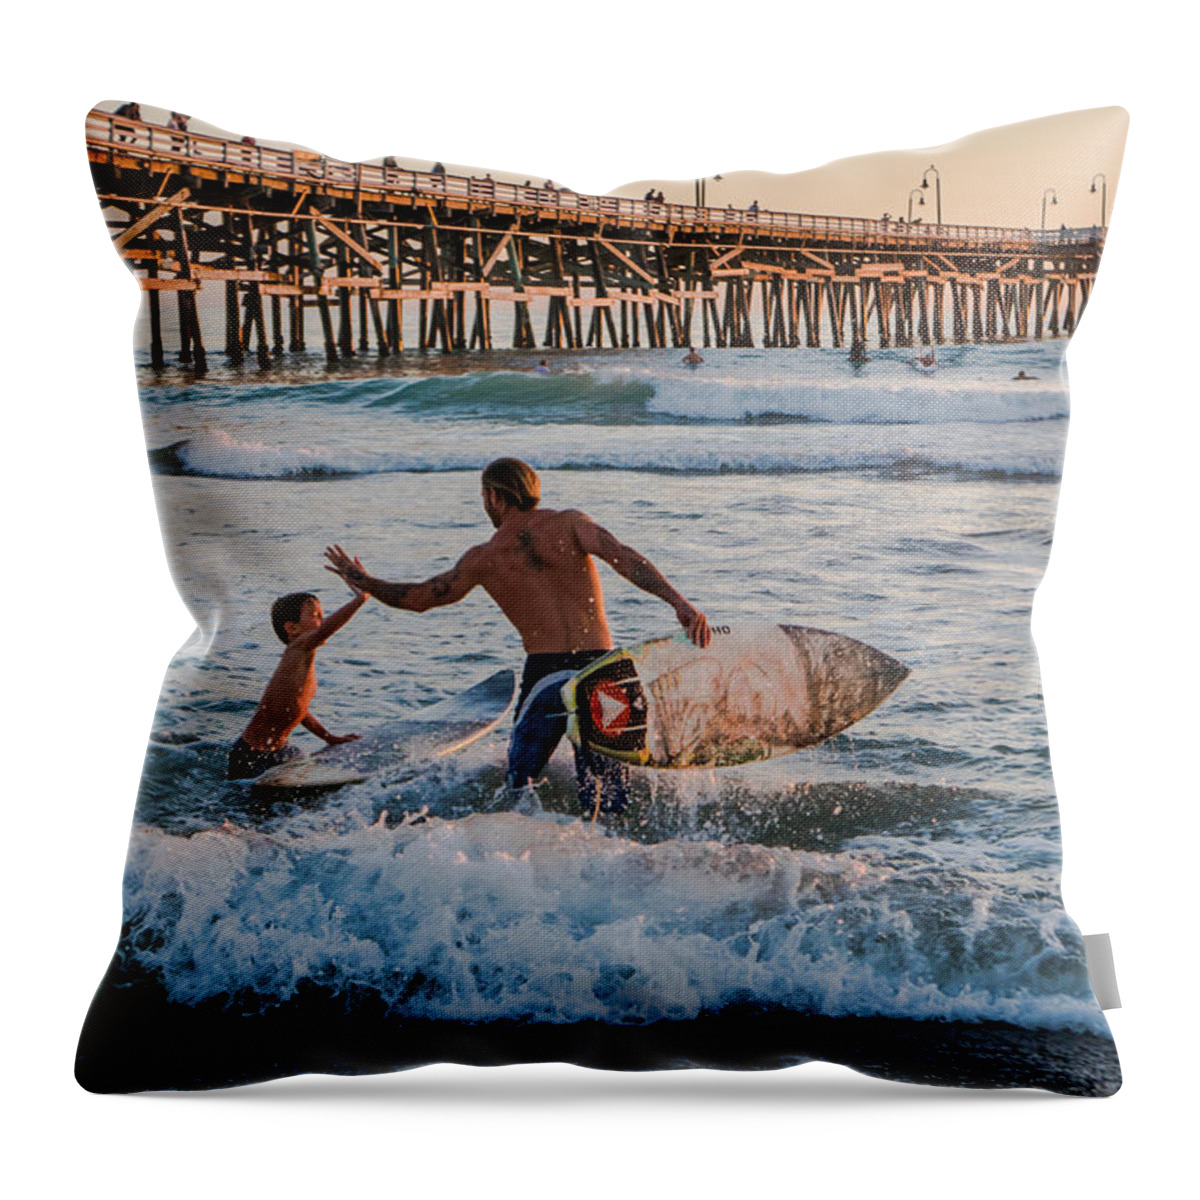 Inspiration Throw Pillow featuring the photograph Surfboard Inspirational by Scott Campbell